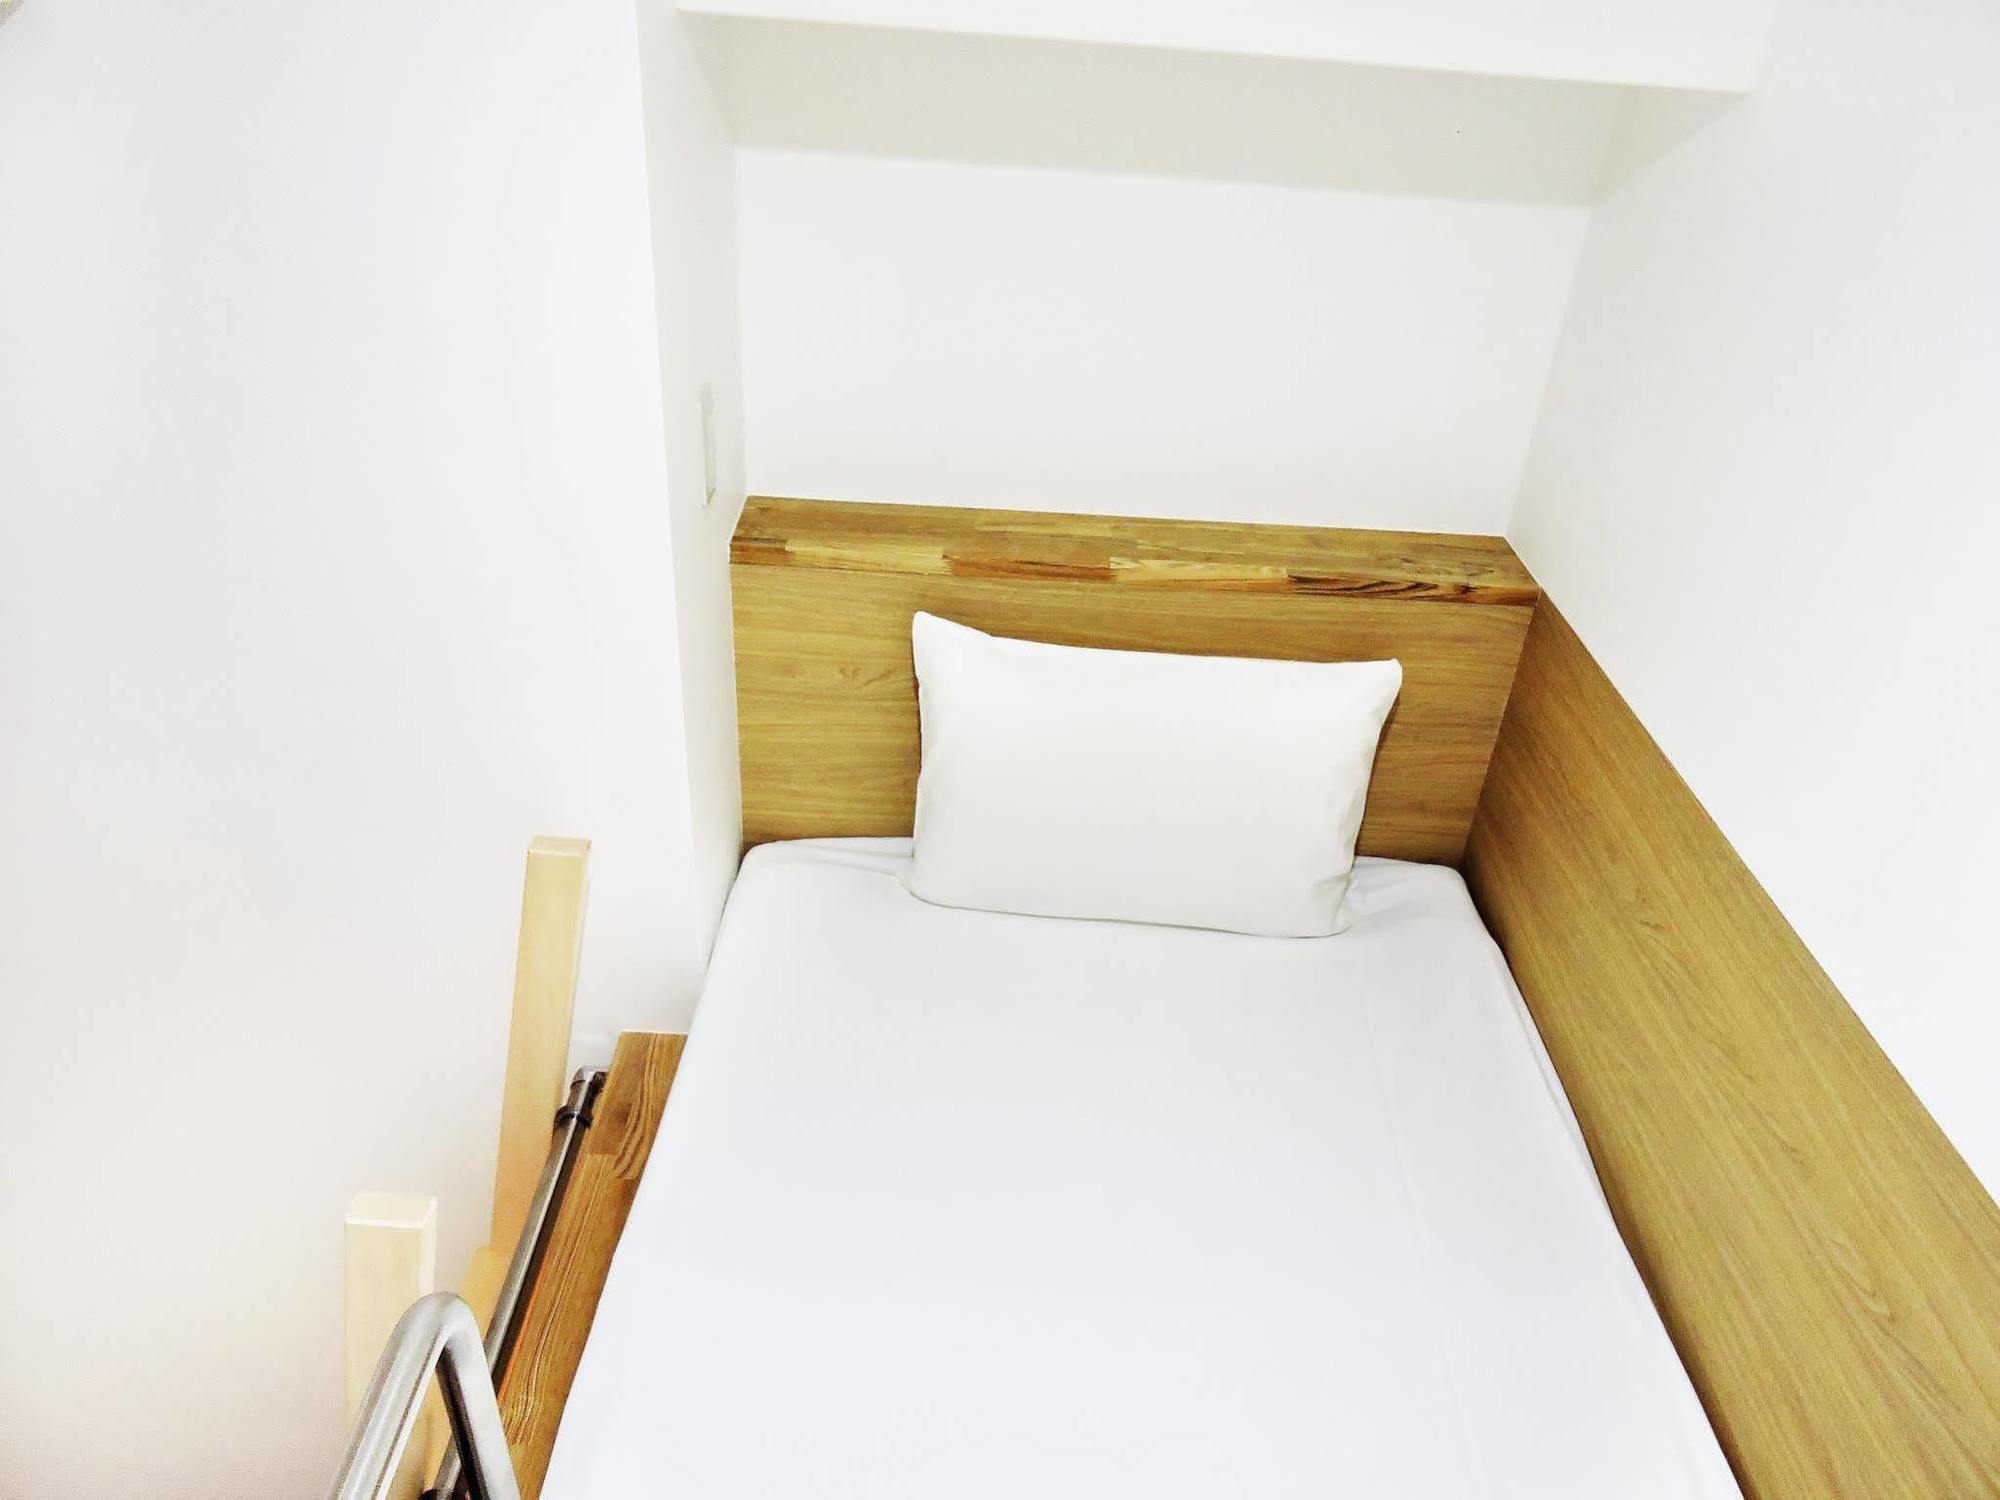 Abest Cube Naha Kokusai Street-Cabin Type Hotel All Room With Key Экстерьер фото